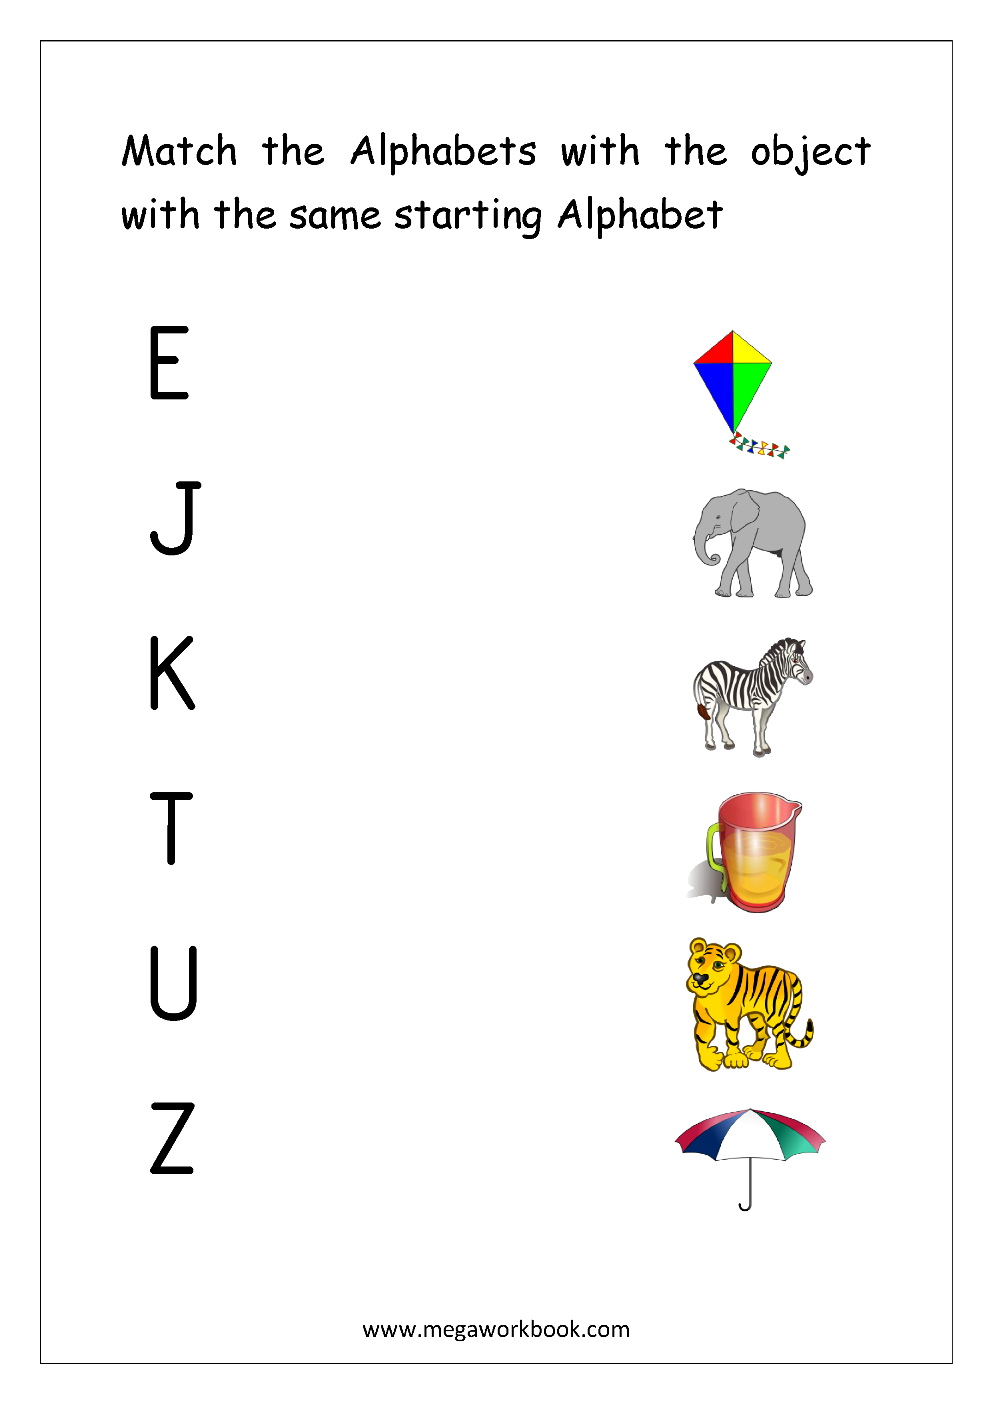 Printable Alphabet Matching Worksheets